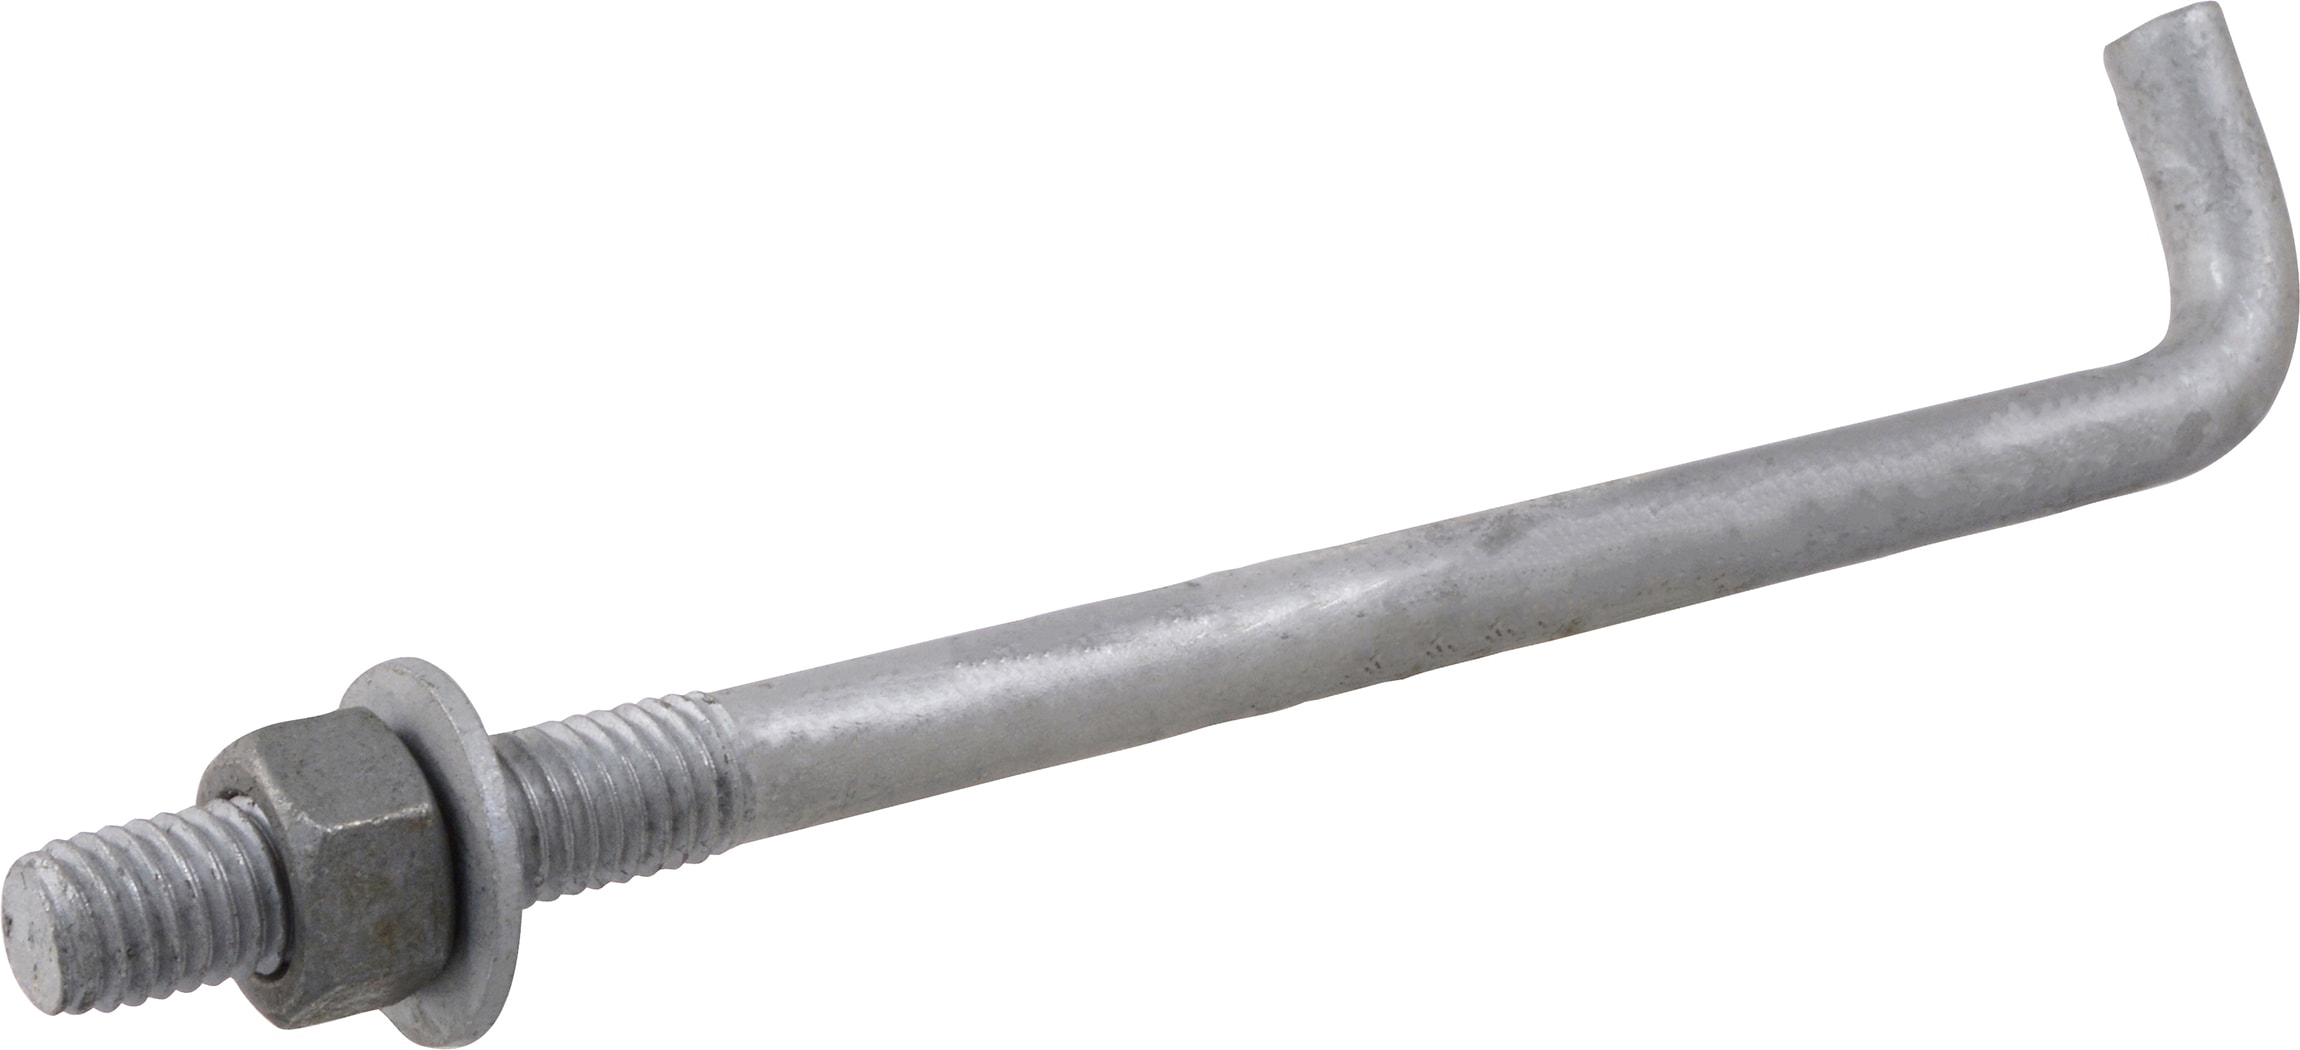 100 Ft. 150 Lb. 12-gauge Galvanized Wire, Hillman Steel Solid Gauge Anchor  Ft